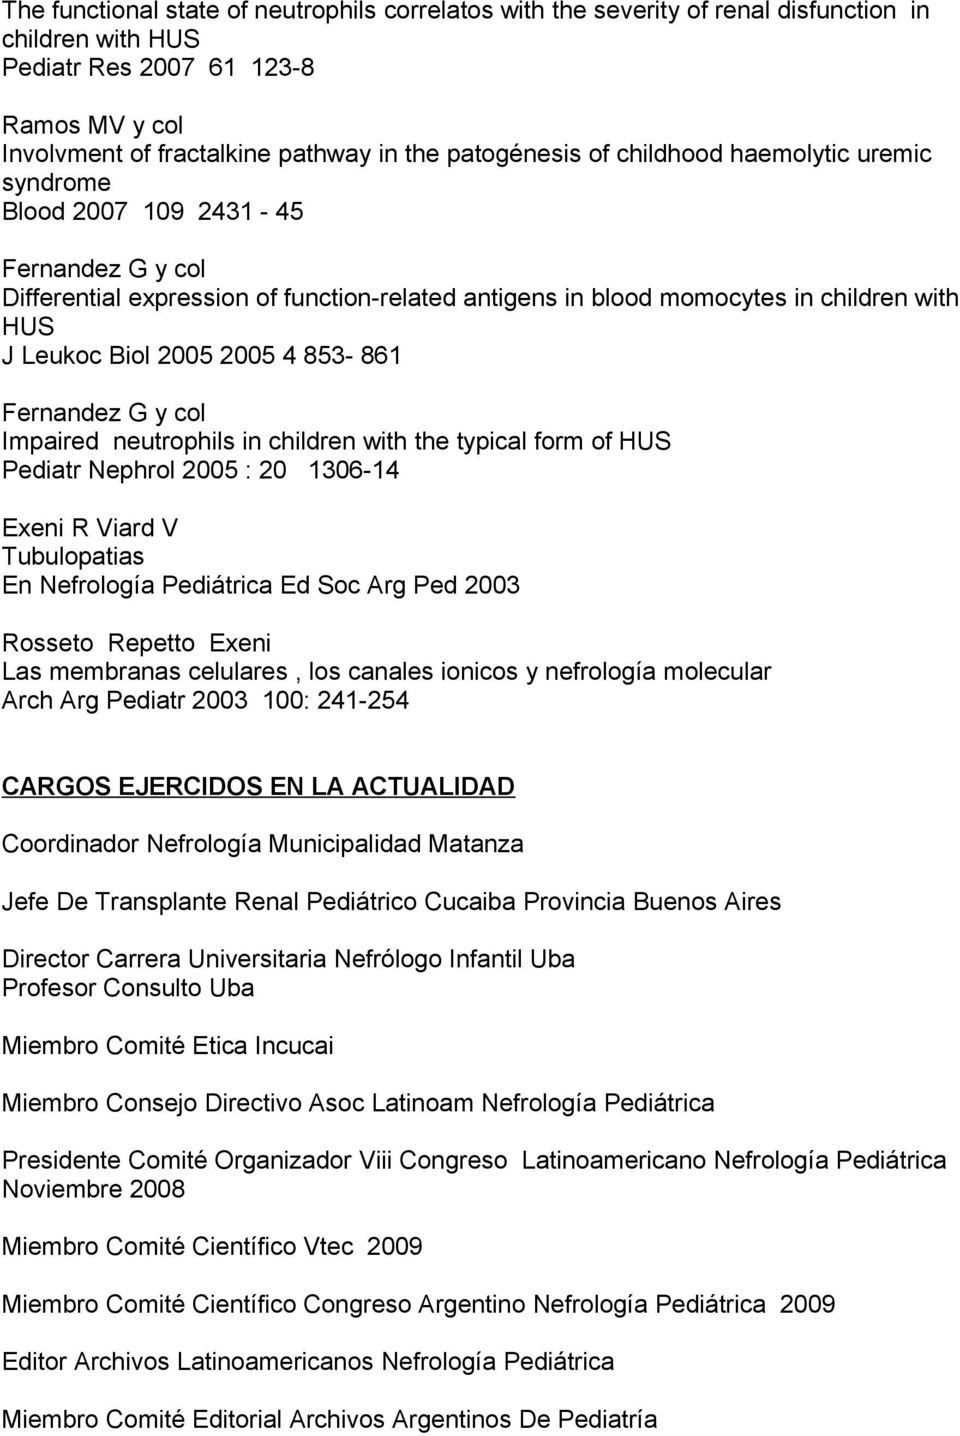 2005 2005 4 853-861 Fernandez G y col Impaired neutrophils in children with the typical form of HUS Pediatr Nephrol 2005 : 20 1306-14 Exeni R Viard V Tubulopatias En Nefrología Pediátrica Ed Soc Arg